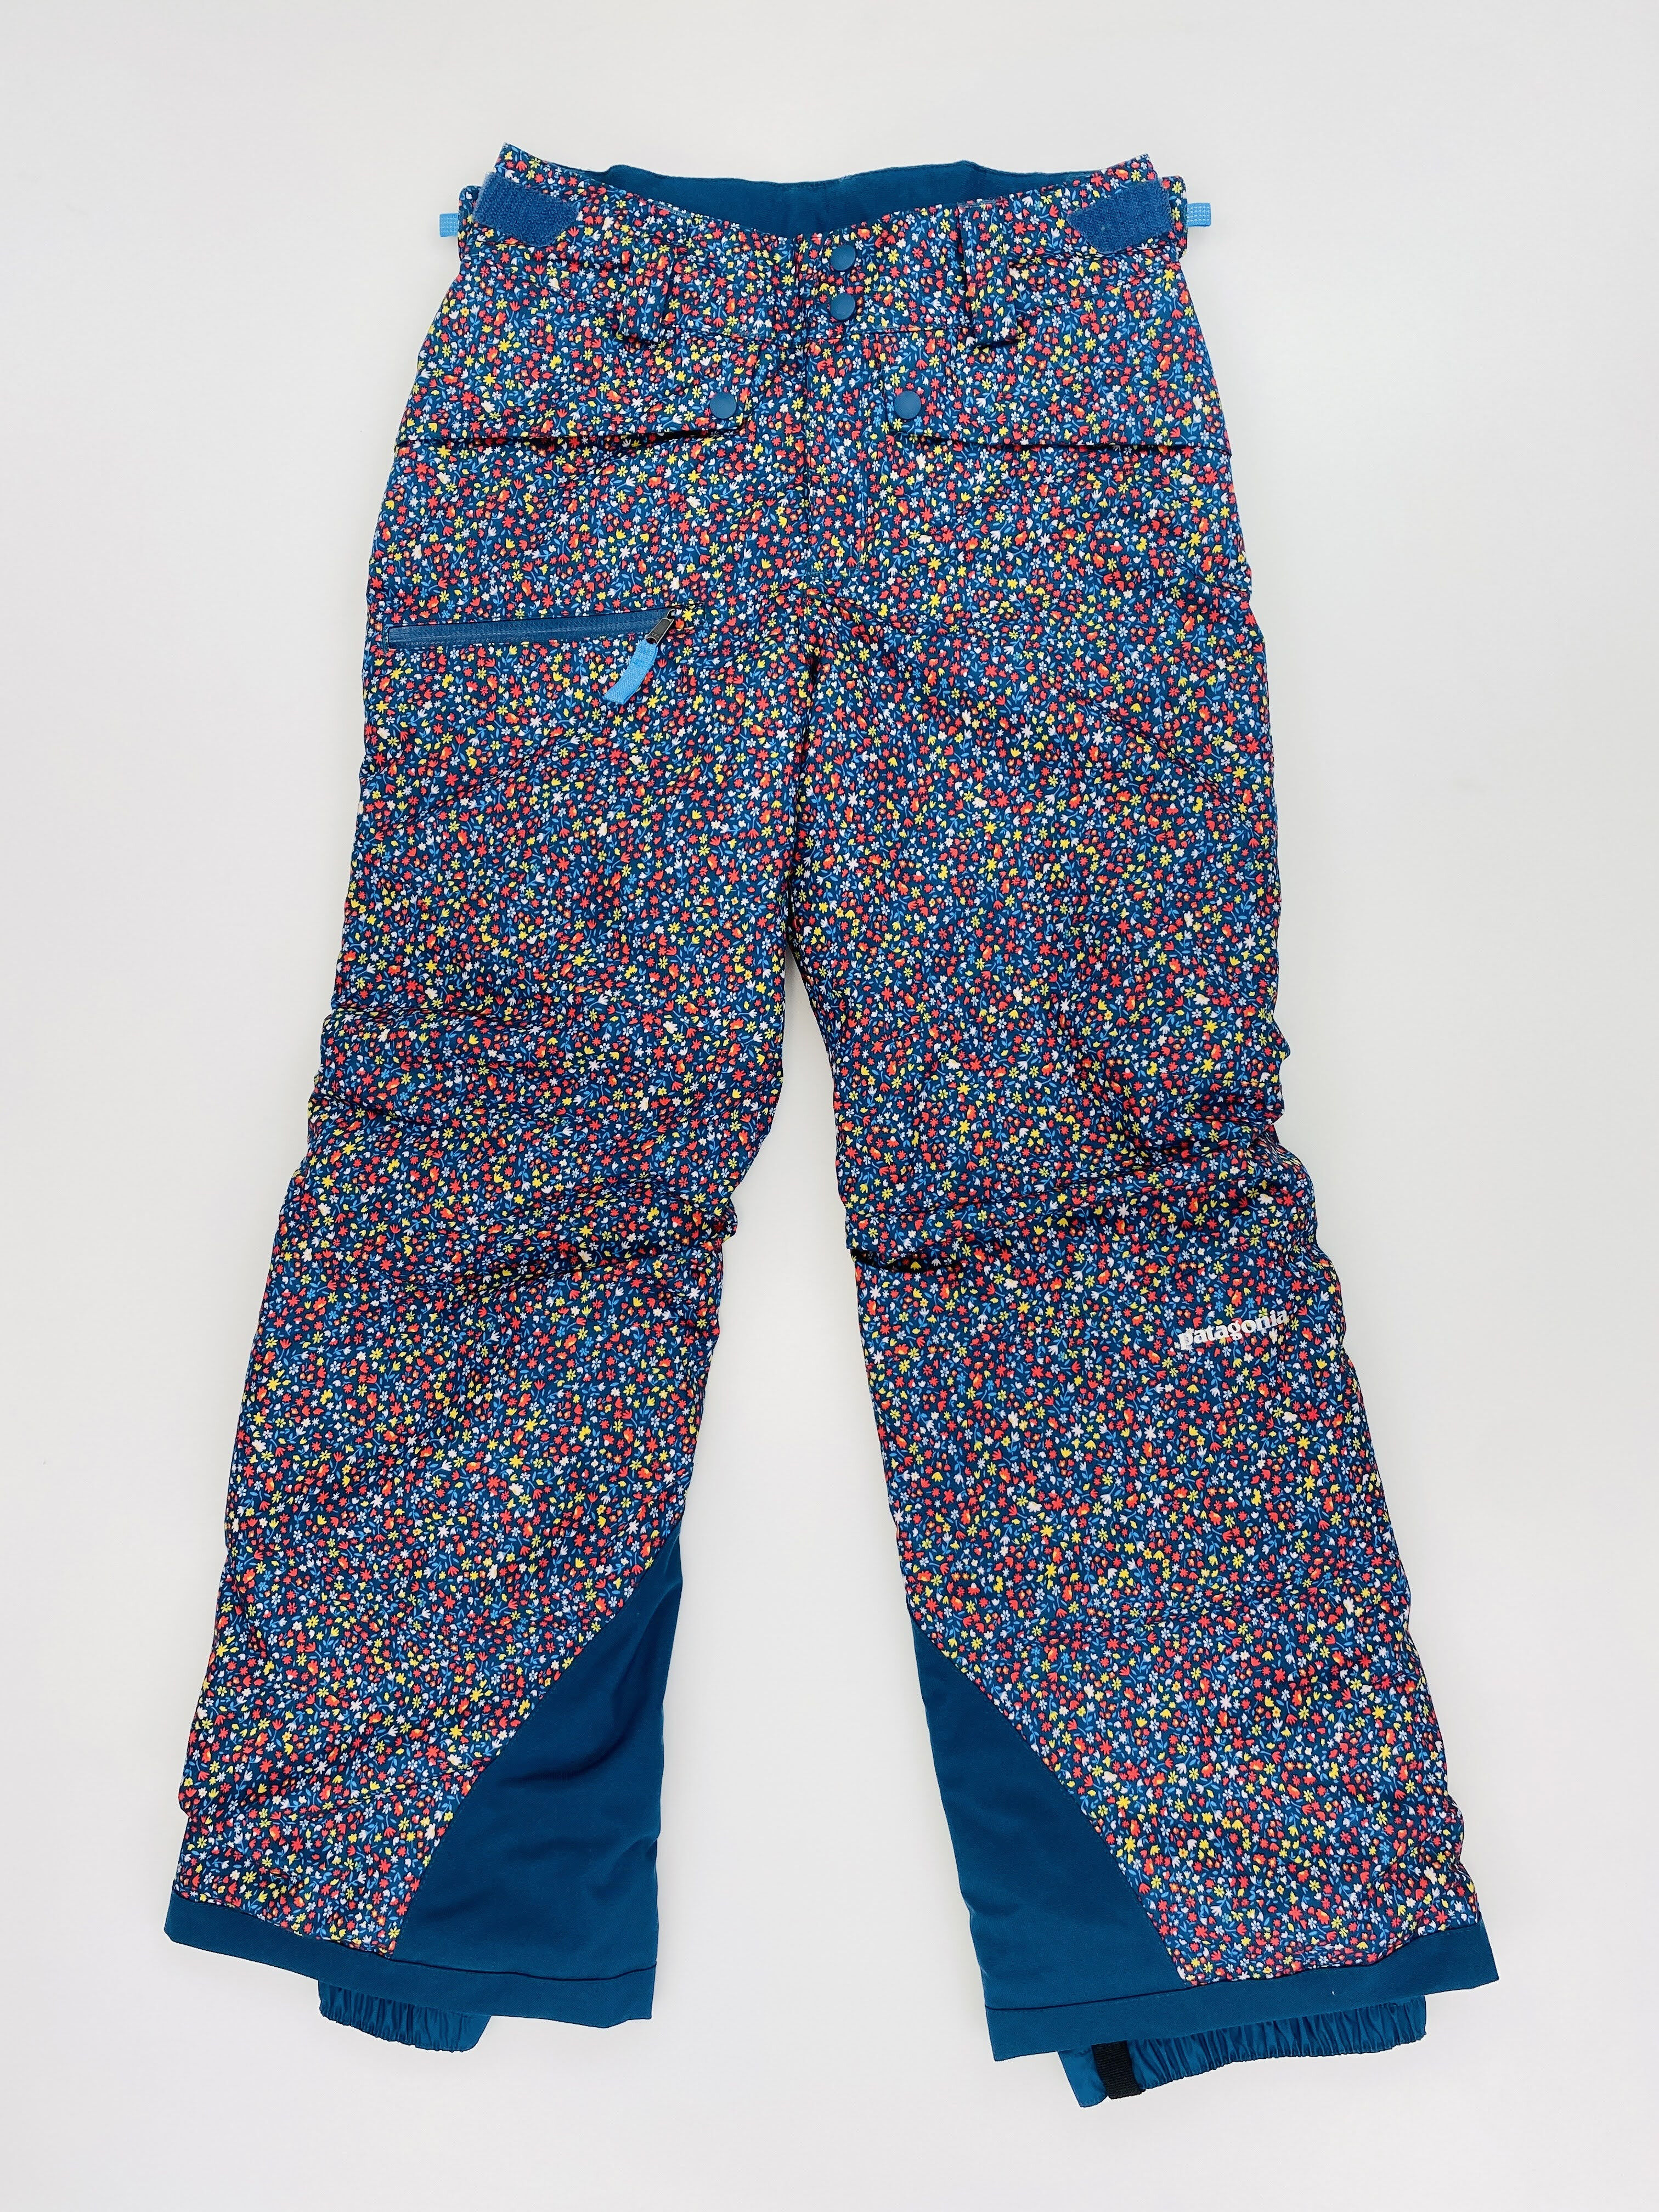 Patagonia Girls' Snowbelle Pants - Second Hand Ski trousers - Kid's - Multicolored - M | Hardloop